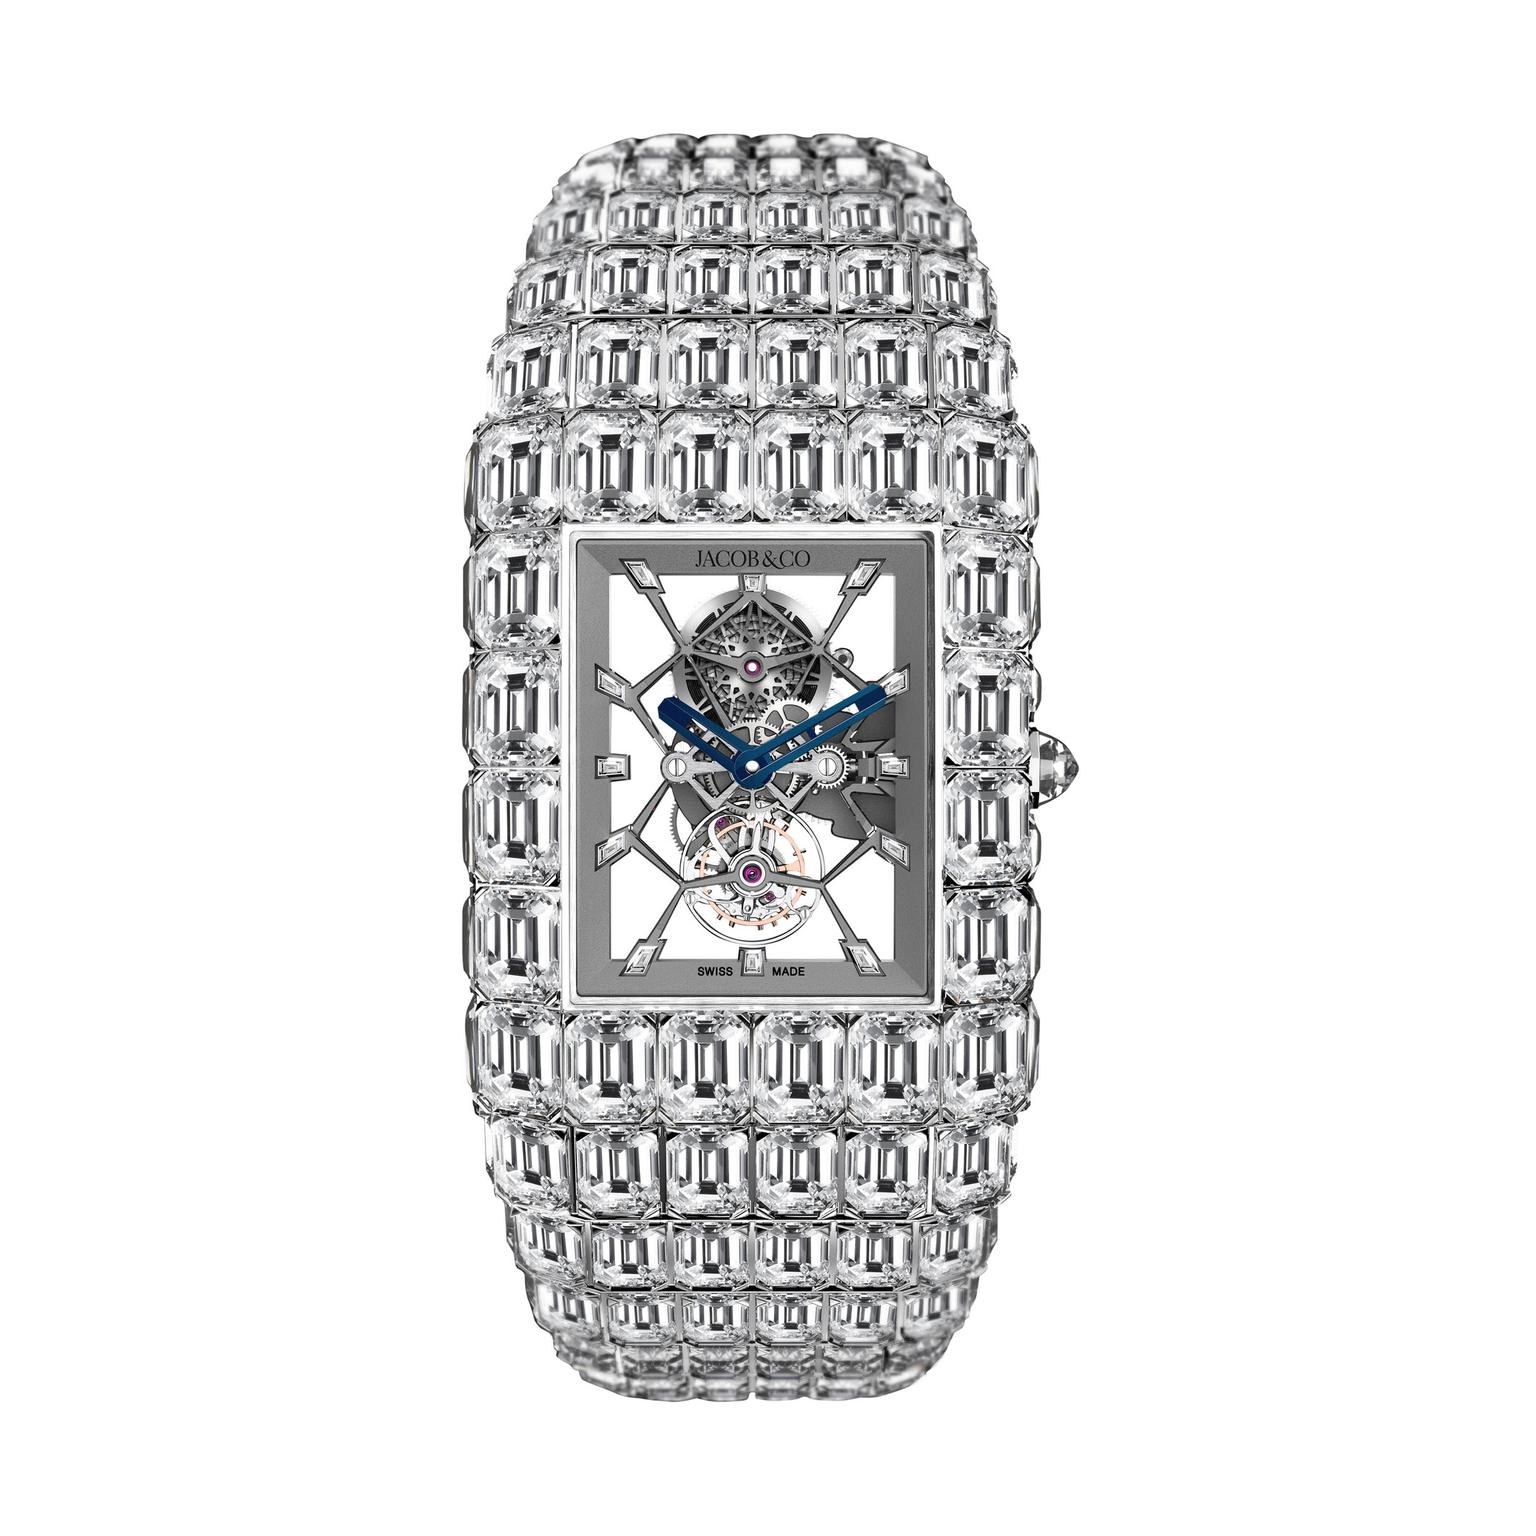 Billionaire 260 carat diamond watch | Jacob & Co | The Jewellery Editor